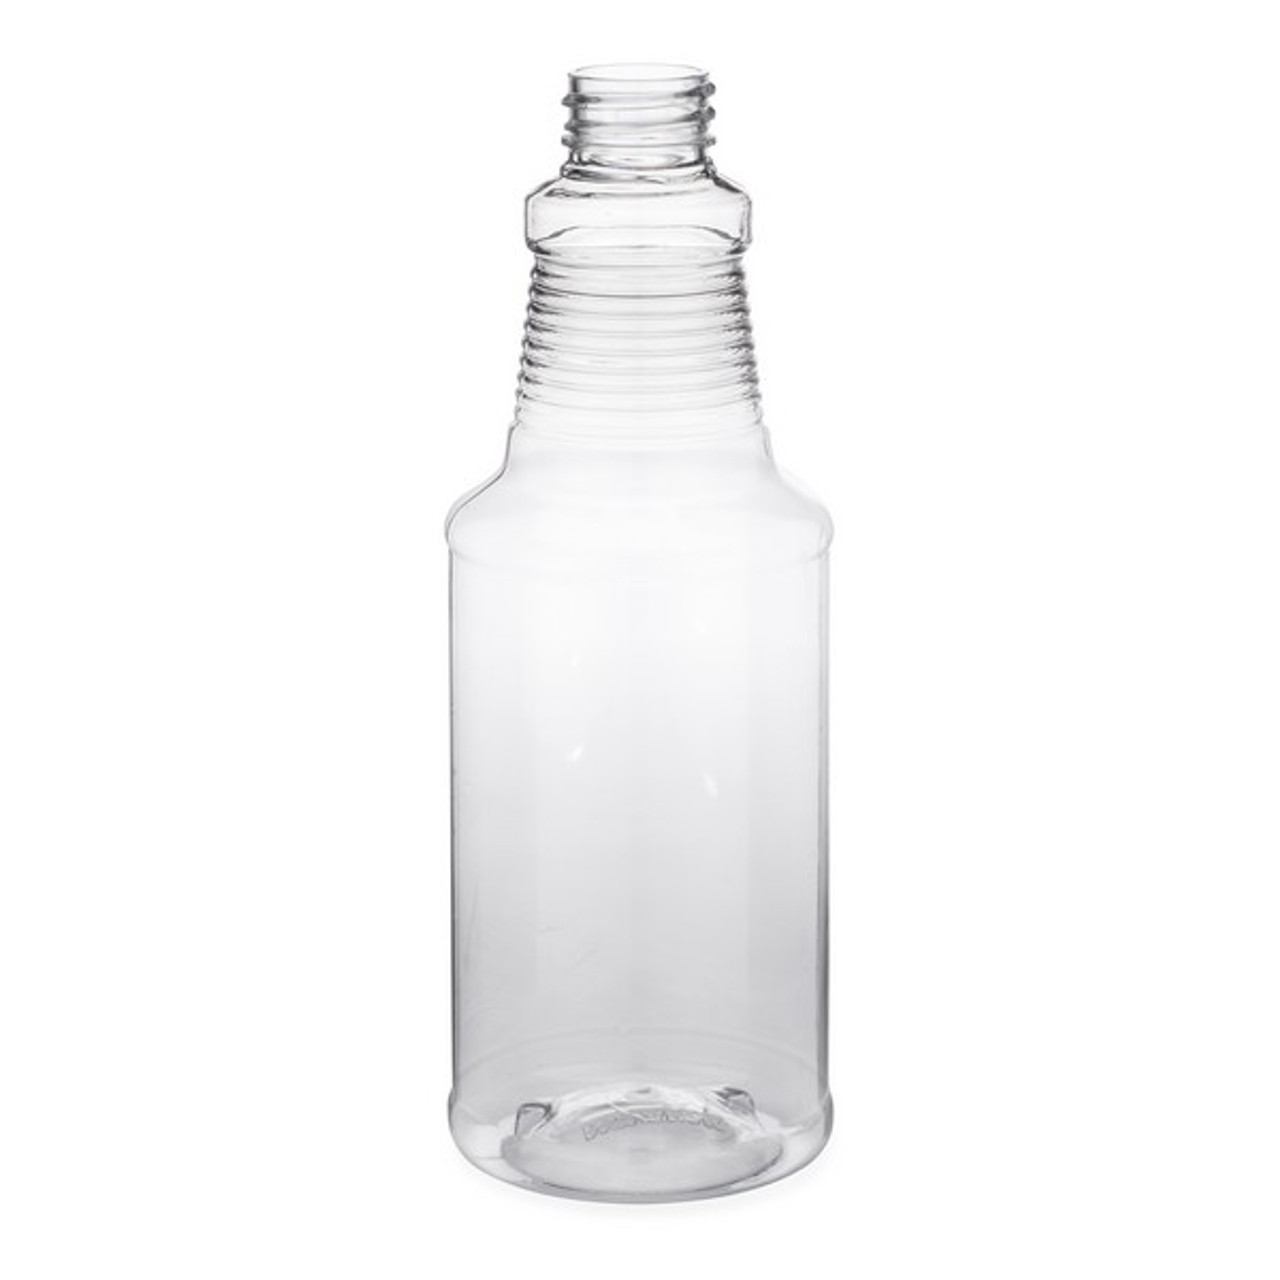 16 oz clear plastic spray bottles